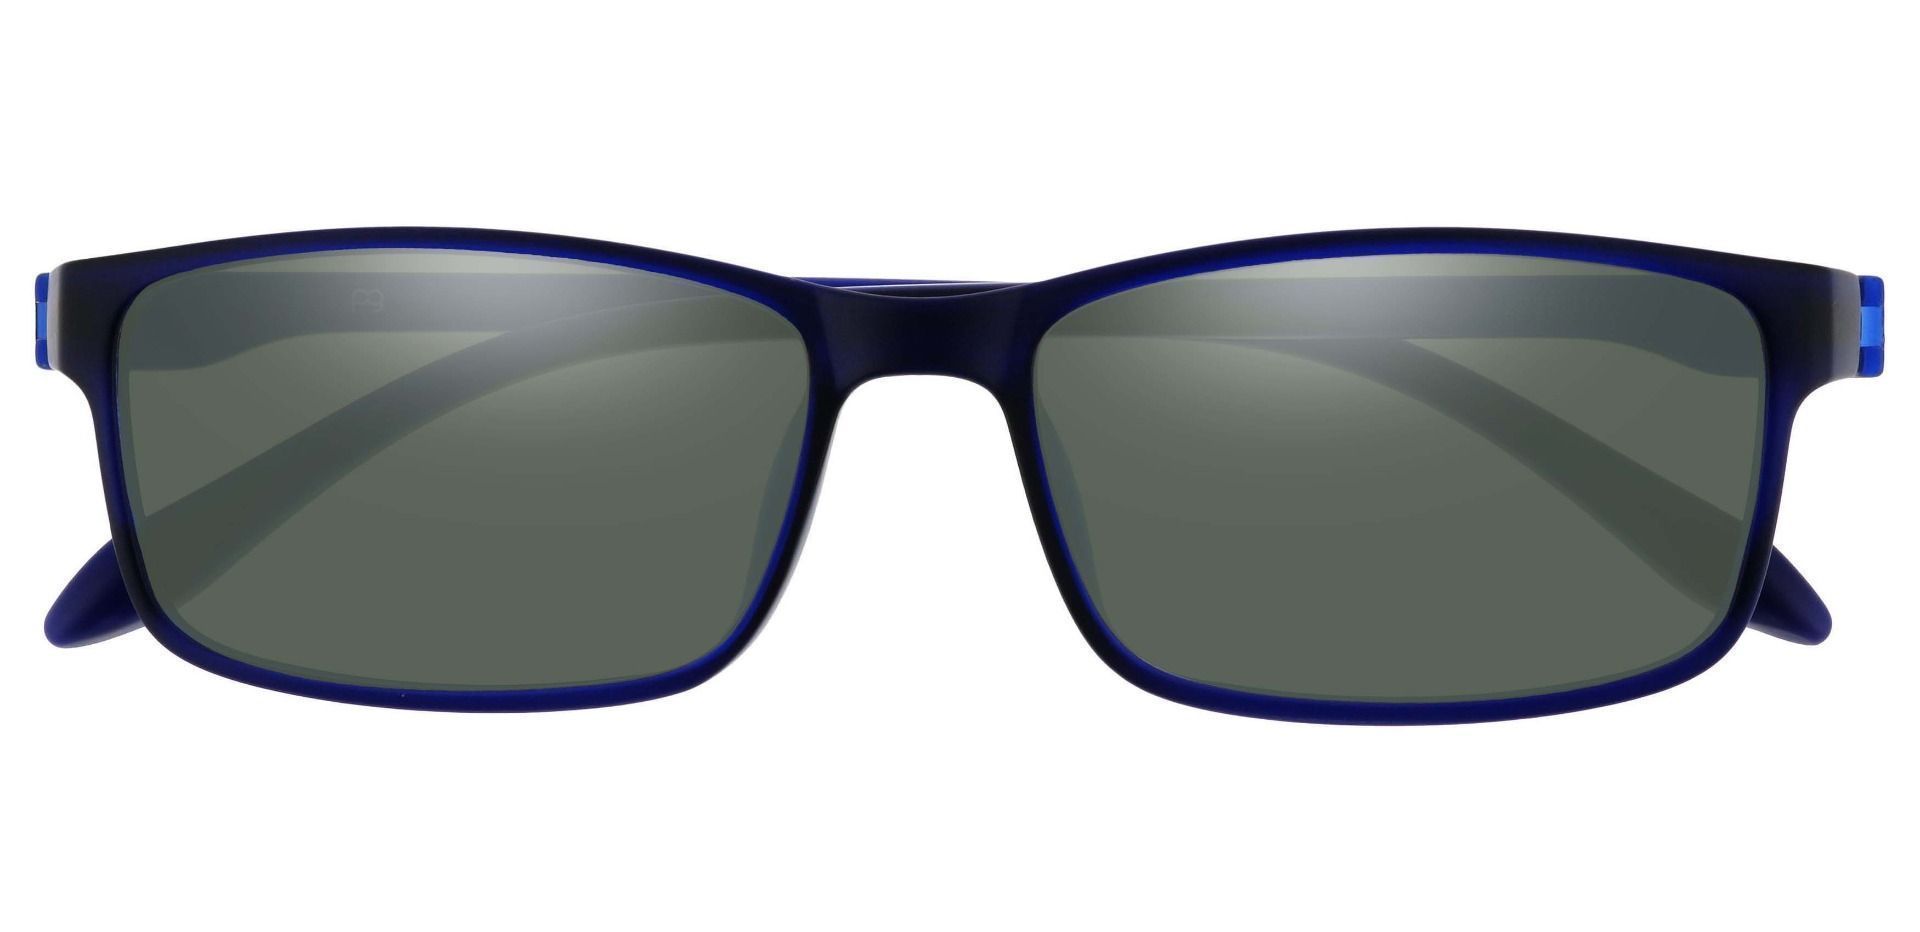 Candice Rectangle Prescription Sunglasses - Blue Frame With Green Lenses